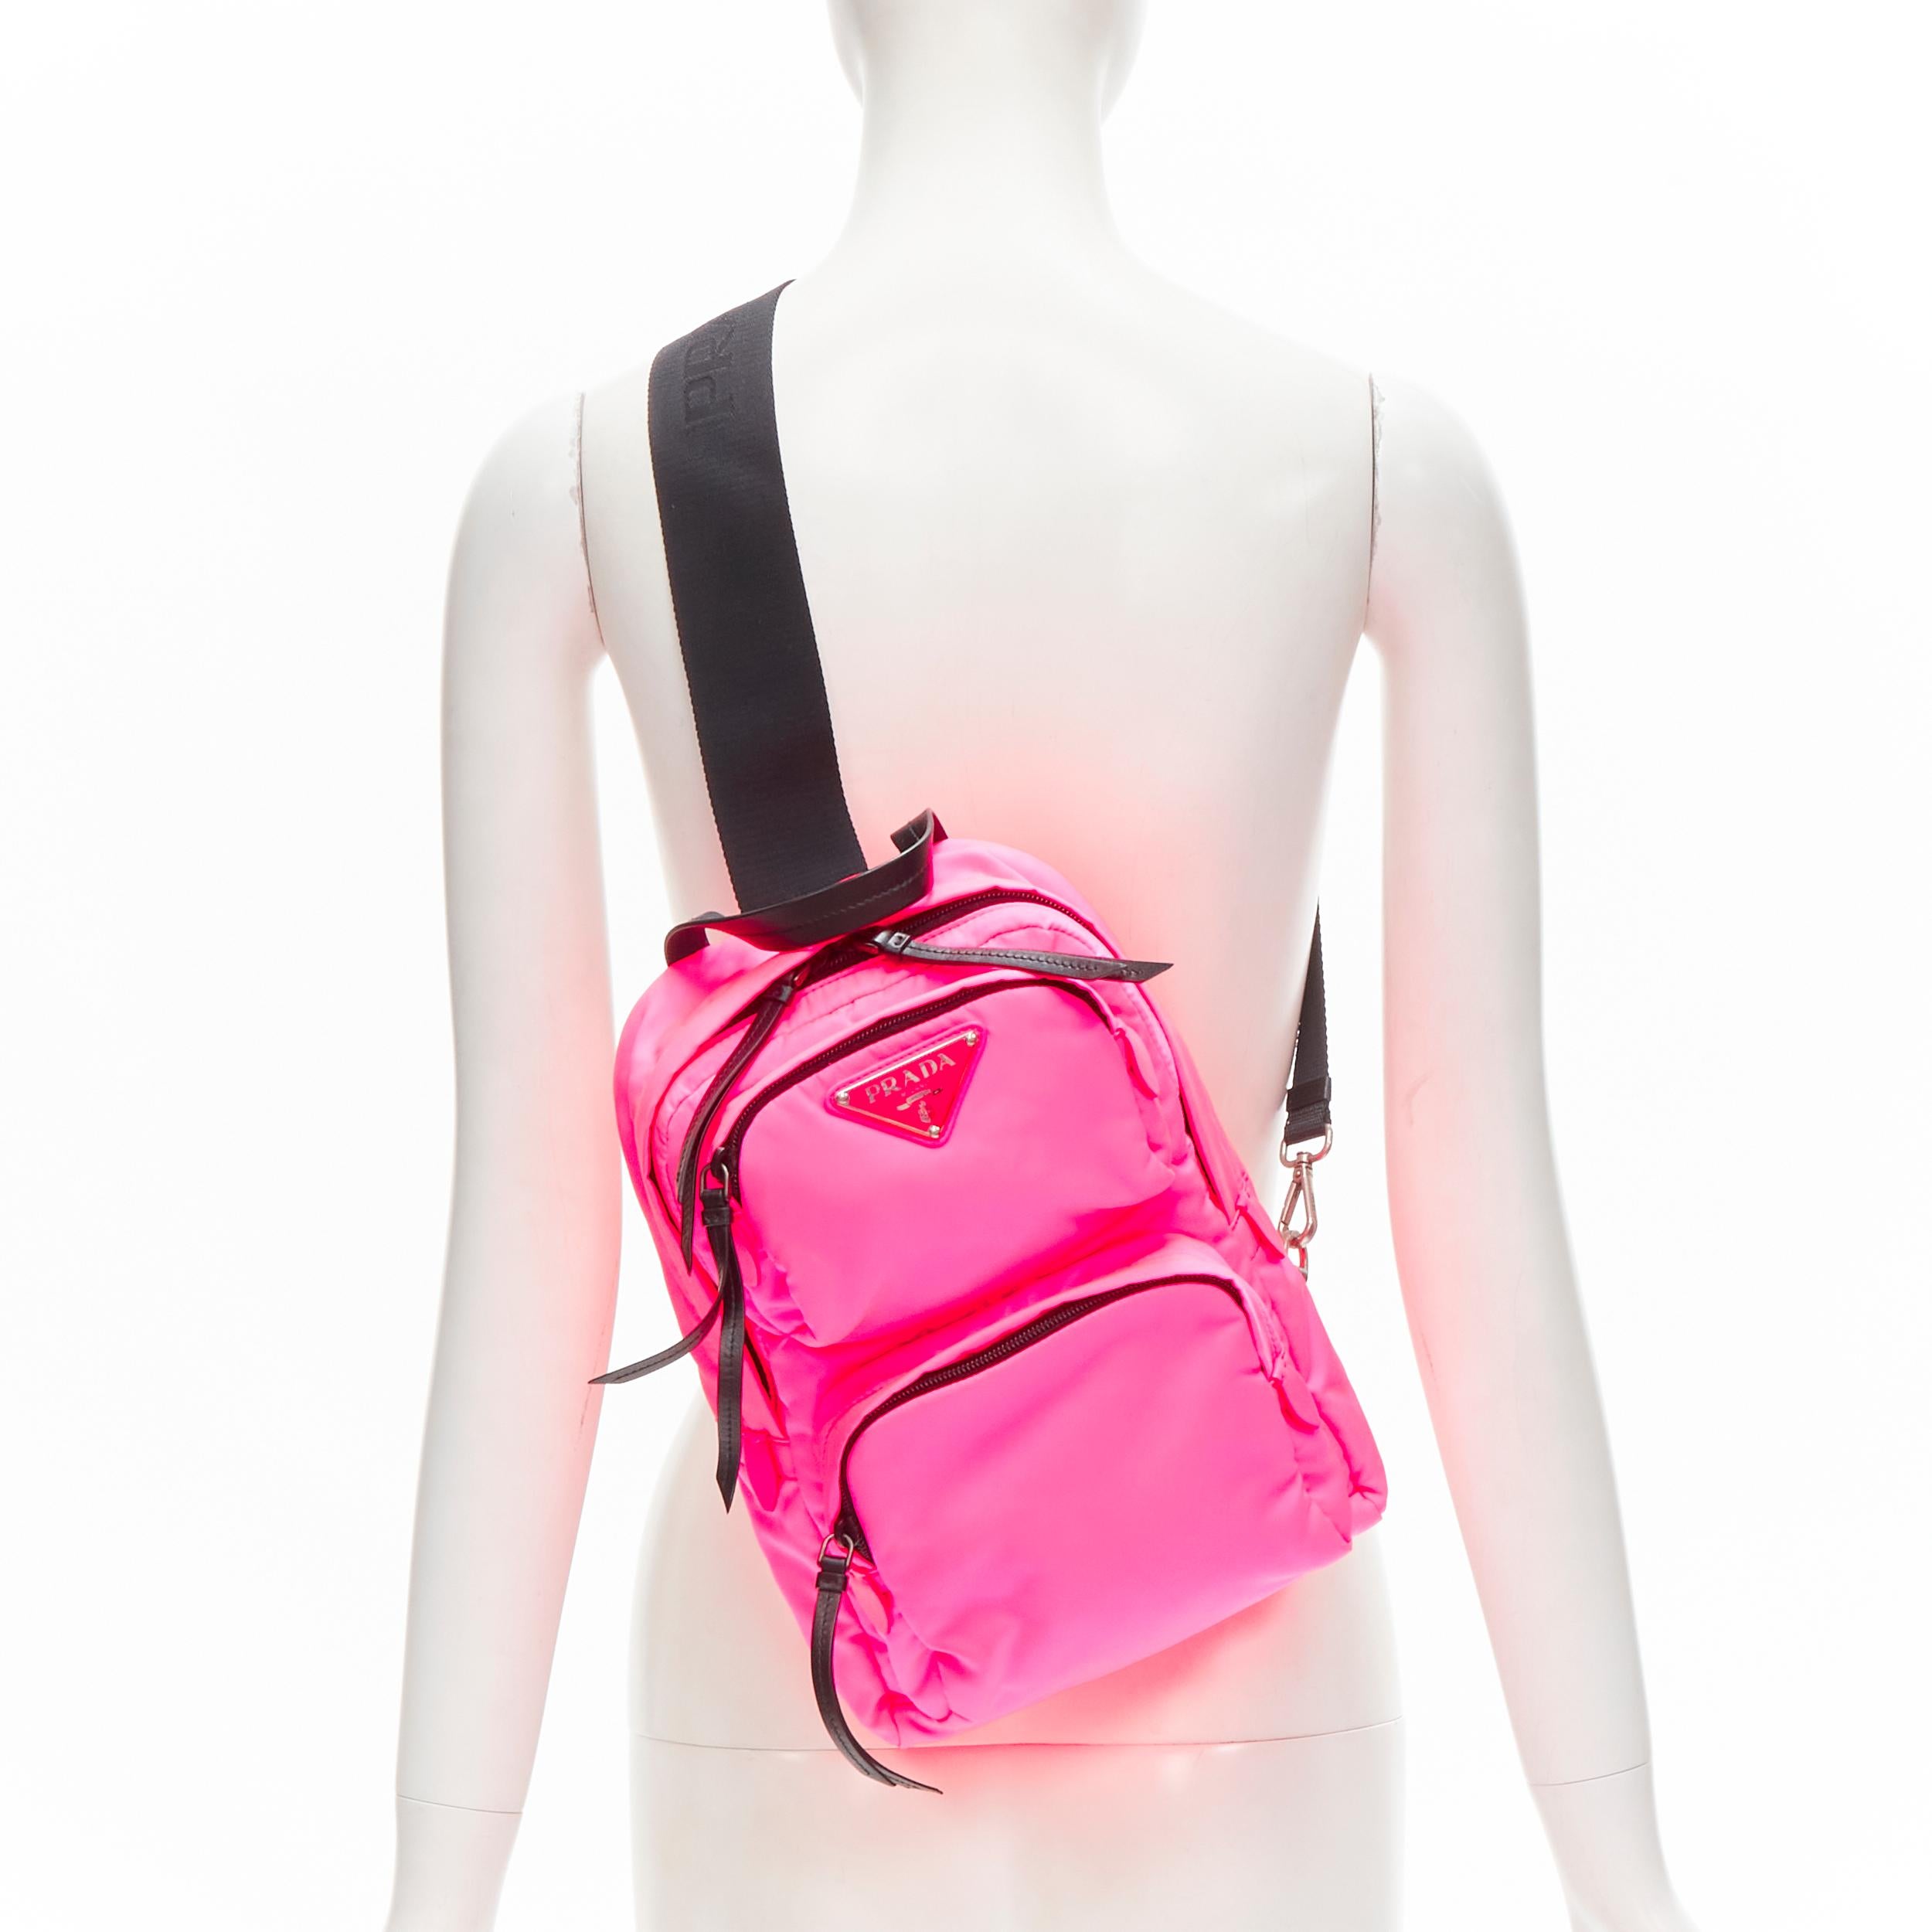 PRADA neon pink Tessuto nylon triangle logo small sling backpack bag
Reference: TGAS/C01230
Brand: Prada
Designer: Miuccia Prada
Model: Tessuto Nylon
Material: Nylon
Color: Pink, Black
Pattern: Solid
Closure: Zip
Lining: Fabric
Extra Details: